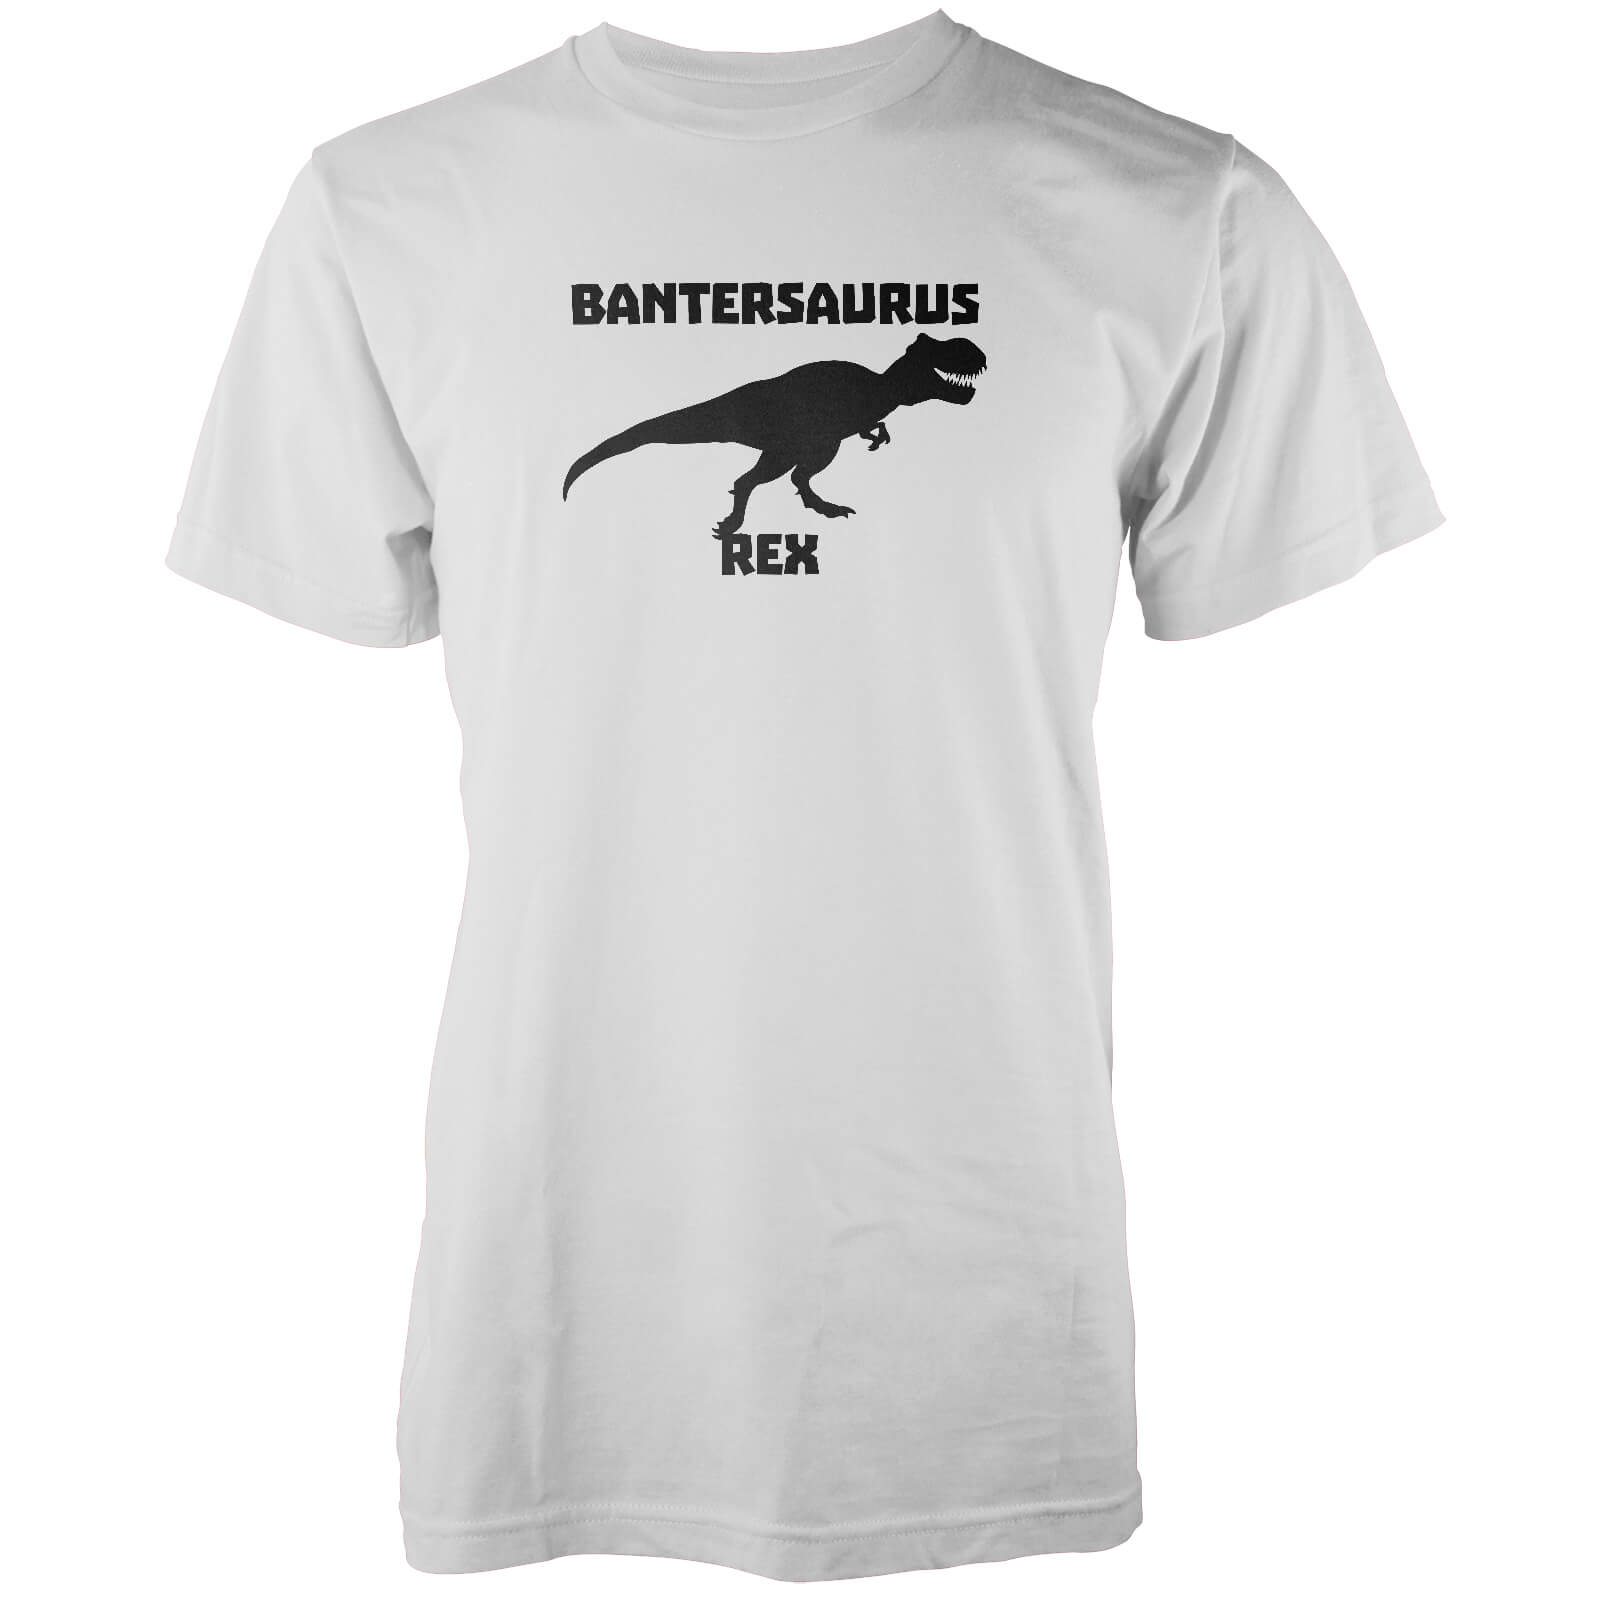 Bantersaurus Rex White T-Shirt - S - White